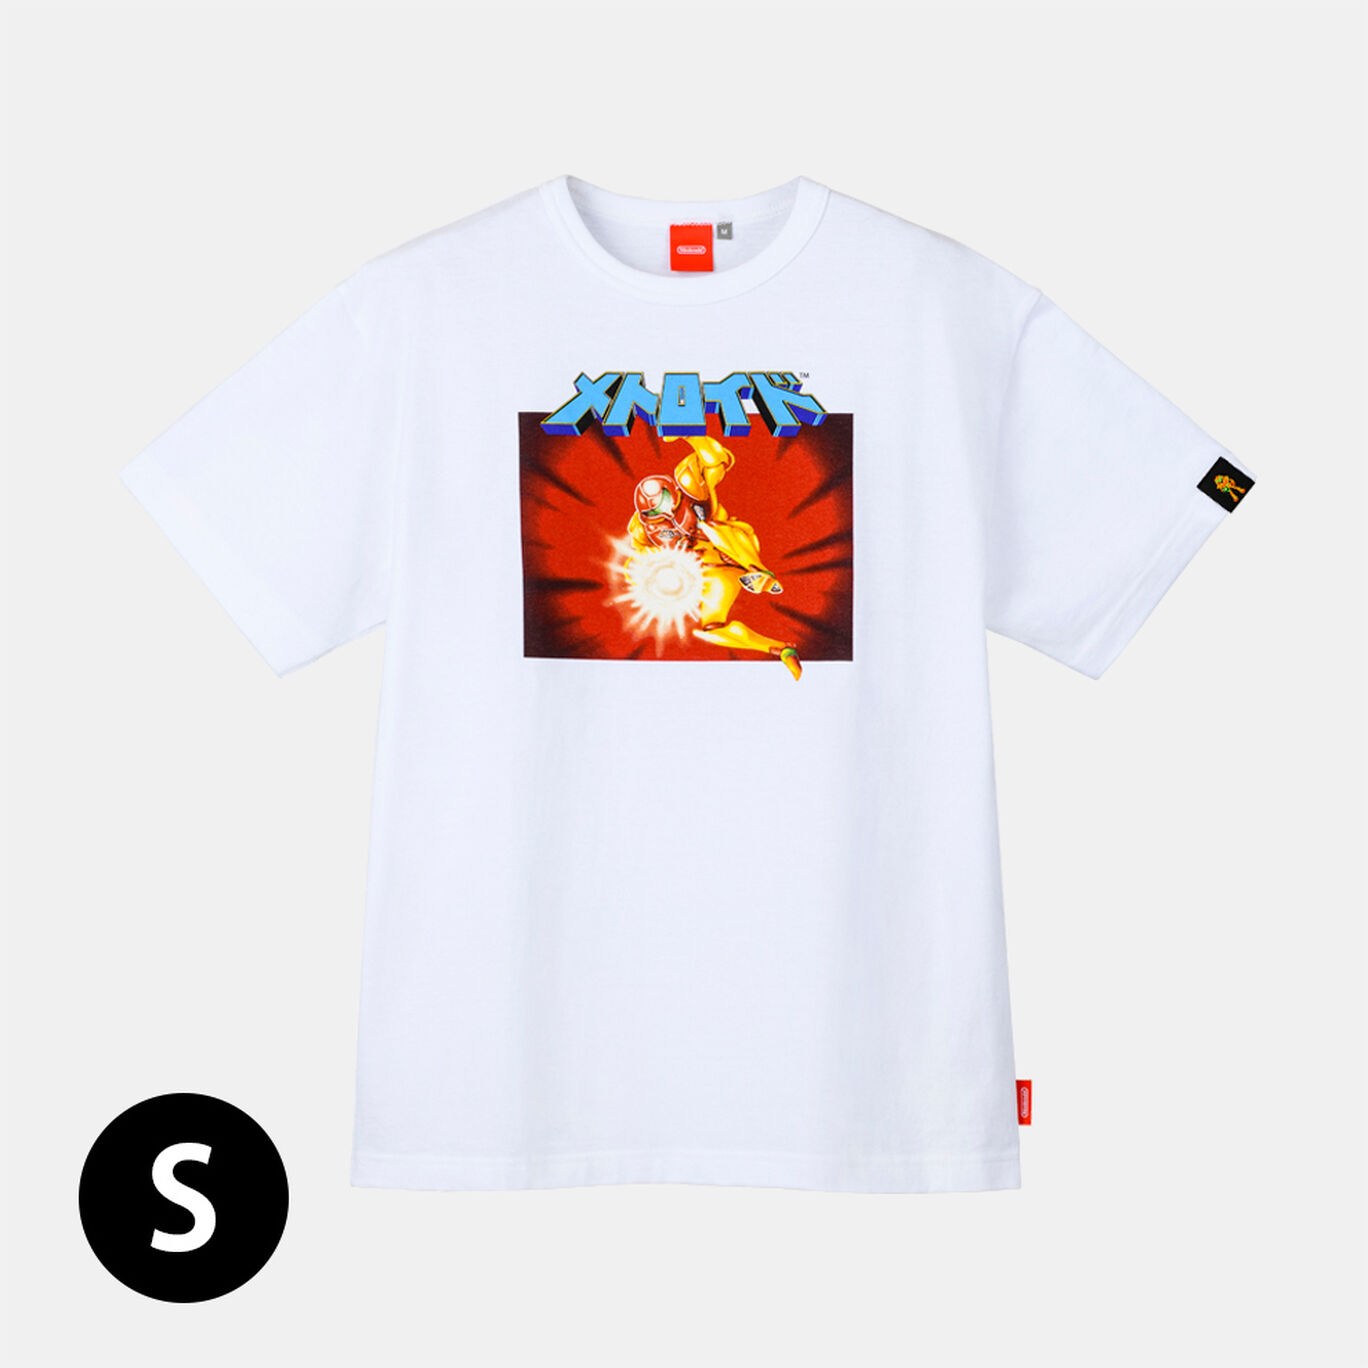 TシャツS メトロイド【Nintendo TOKYO取り扱い商品】